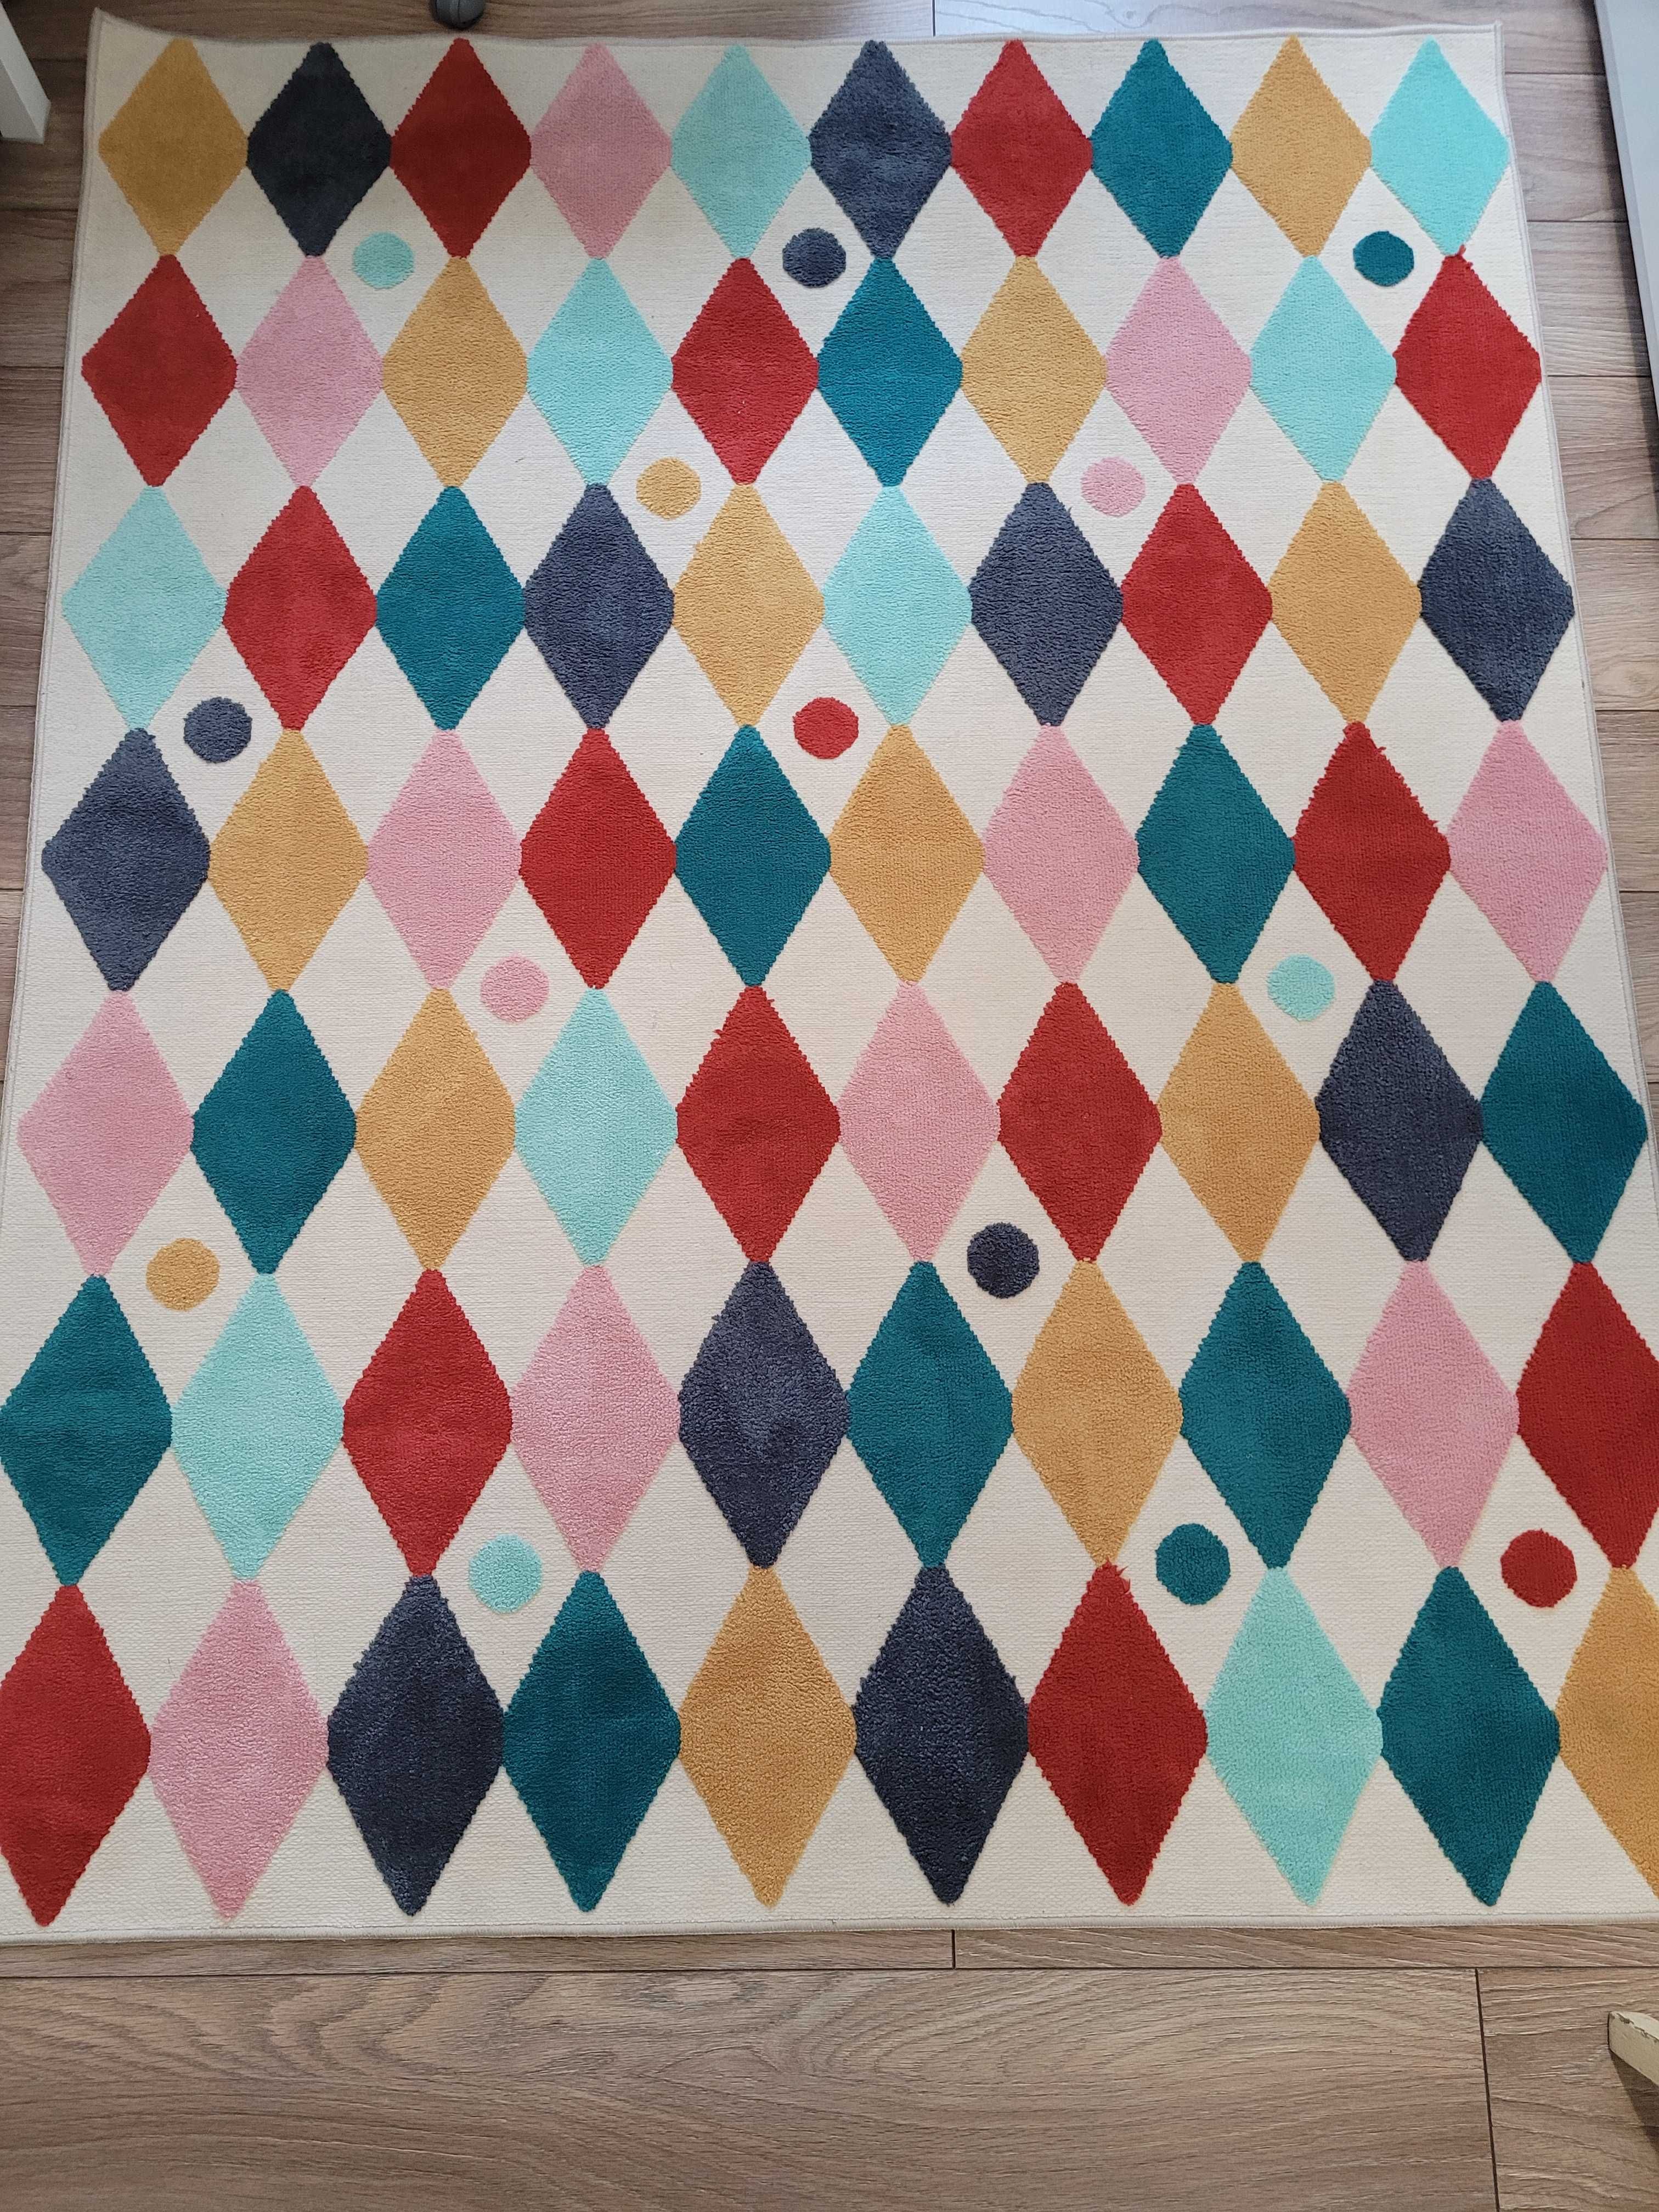 Kolorowy dywan dla dziecka